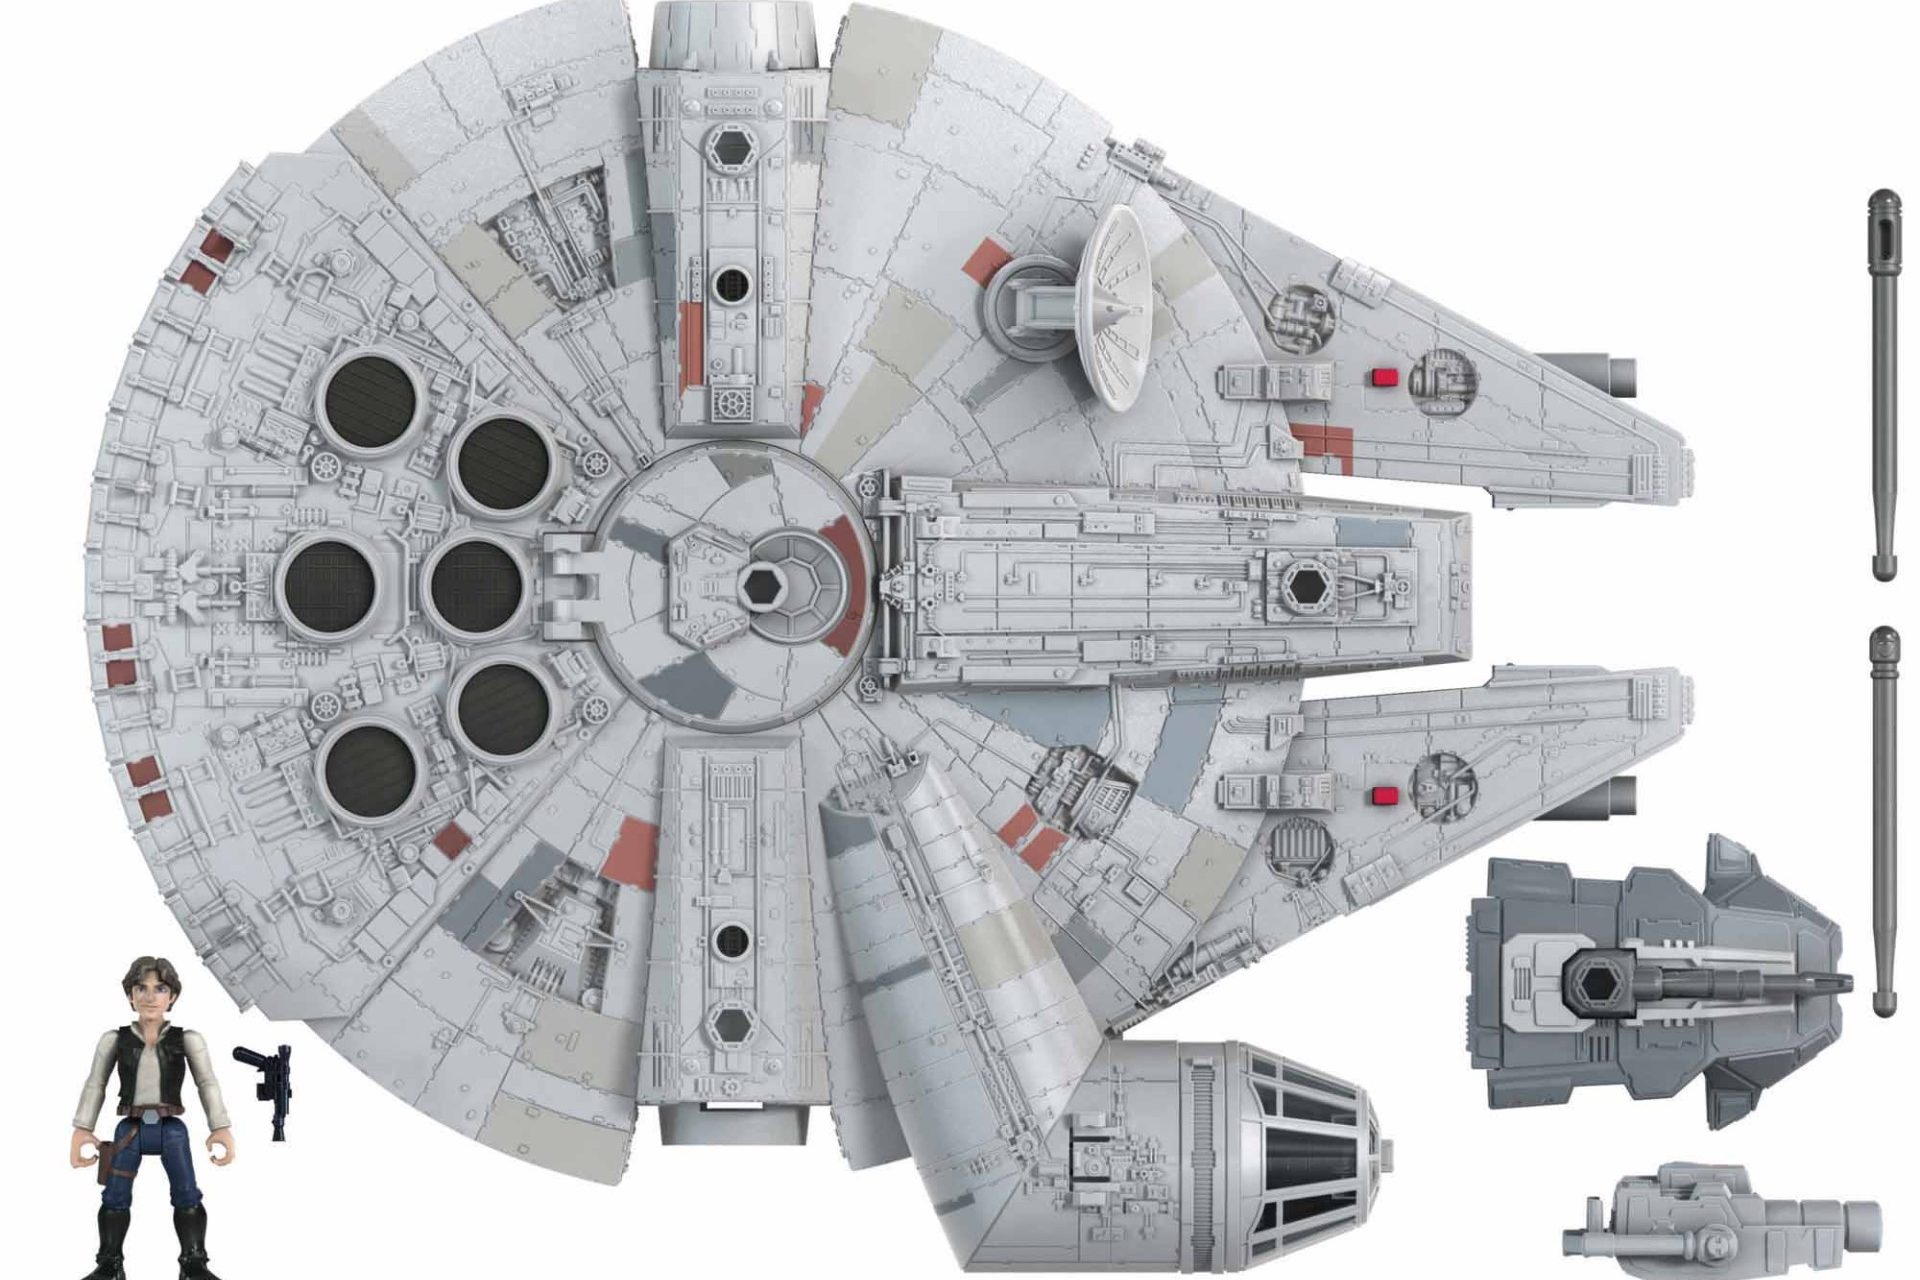 The Millennium Falcon ship